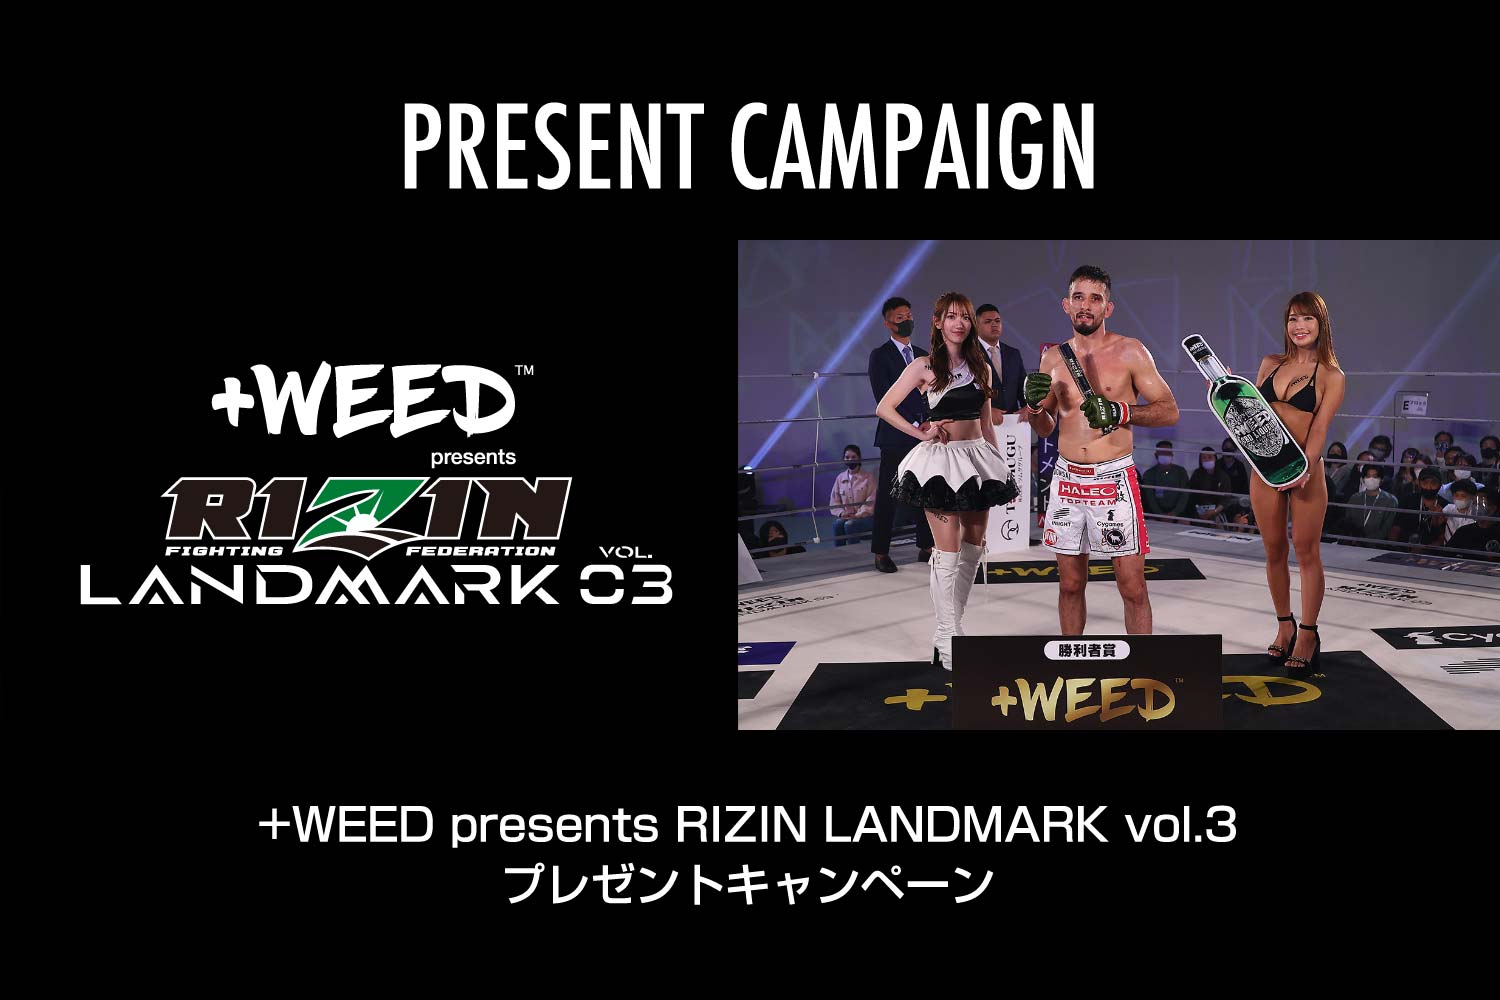 +WEED presents RIZIN LANDMARK vol.3 プレゼントキャンペーン